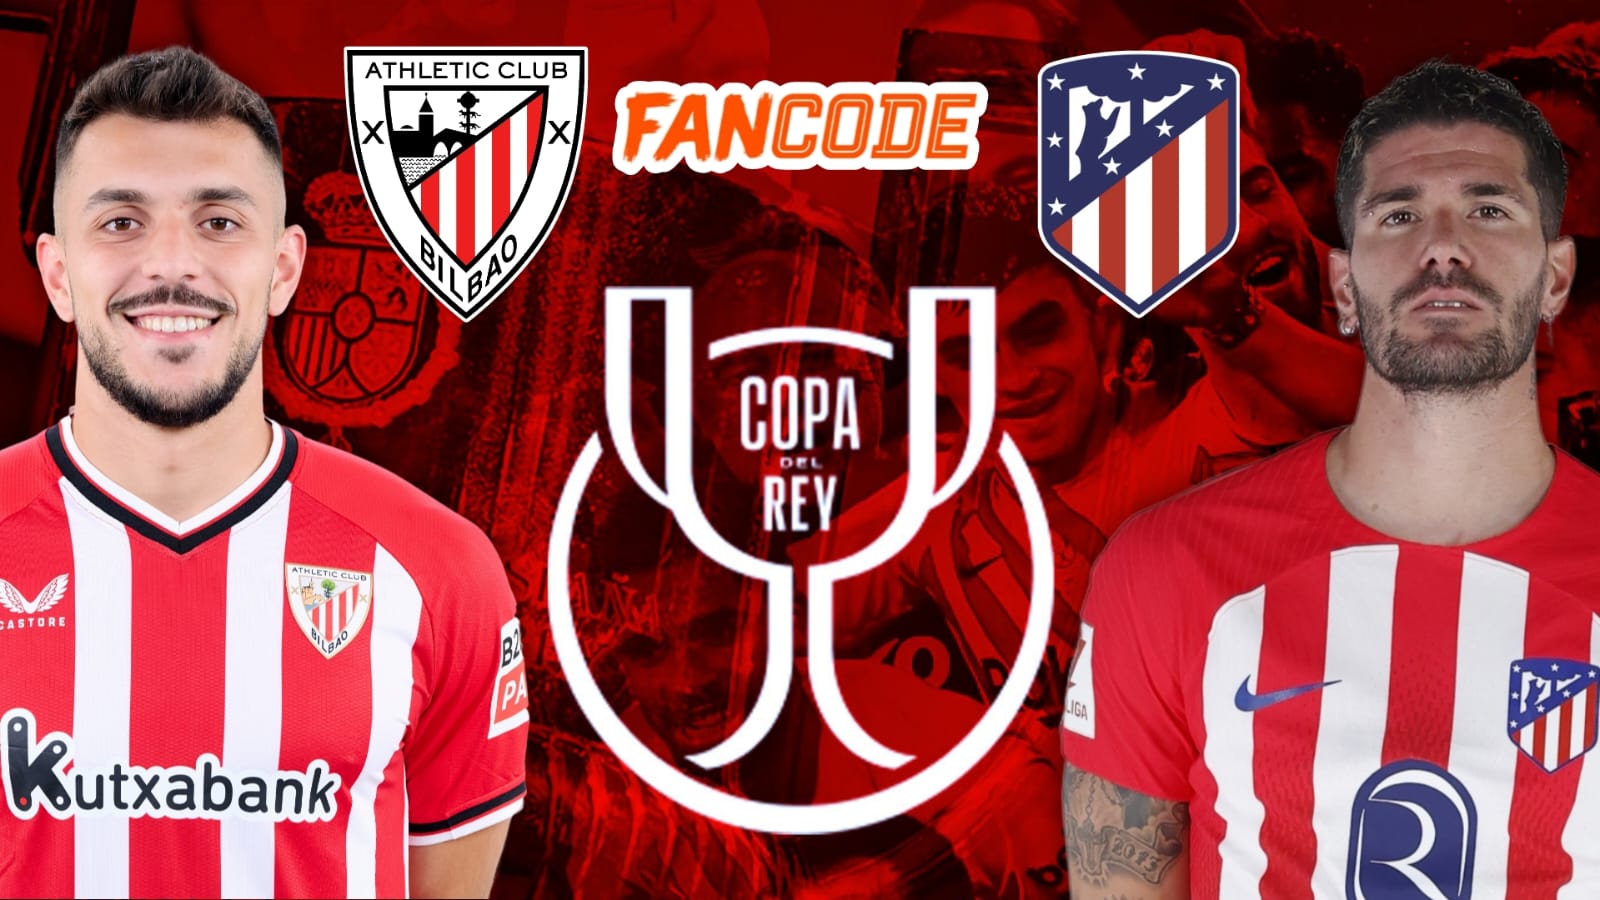 Copa del Rey Preview: Athletic Club vs Atlético Madrid | Fancode Stream